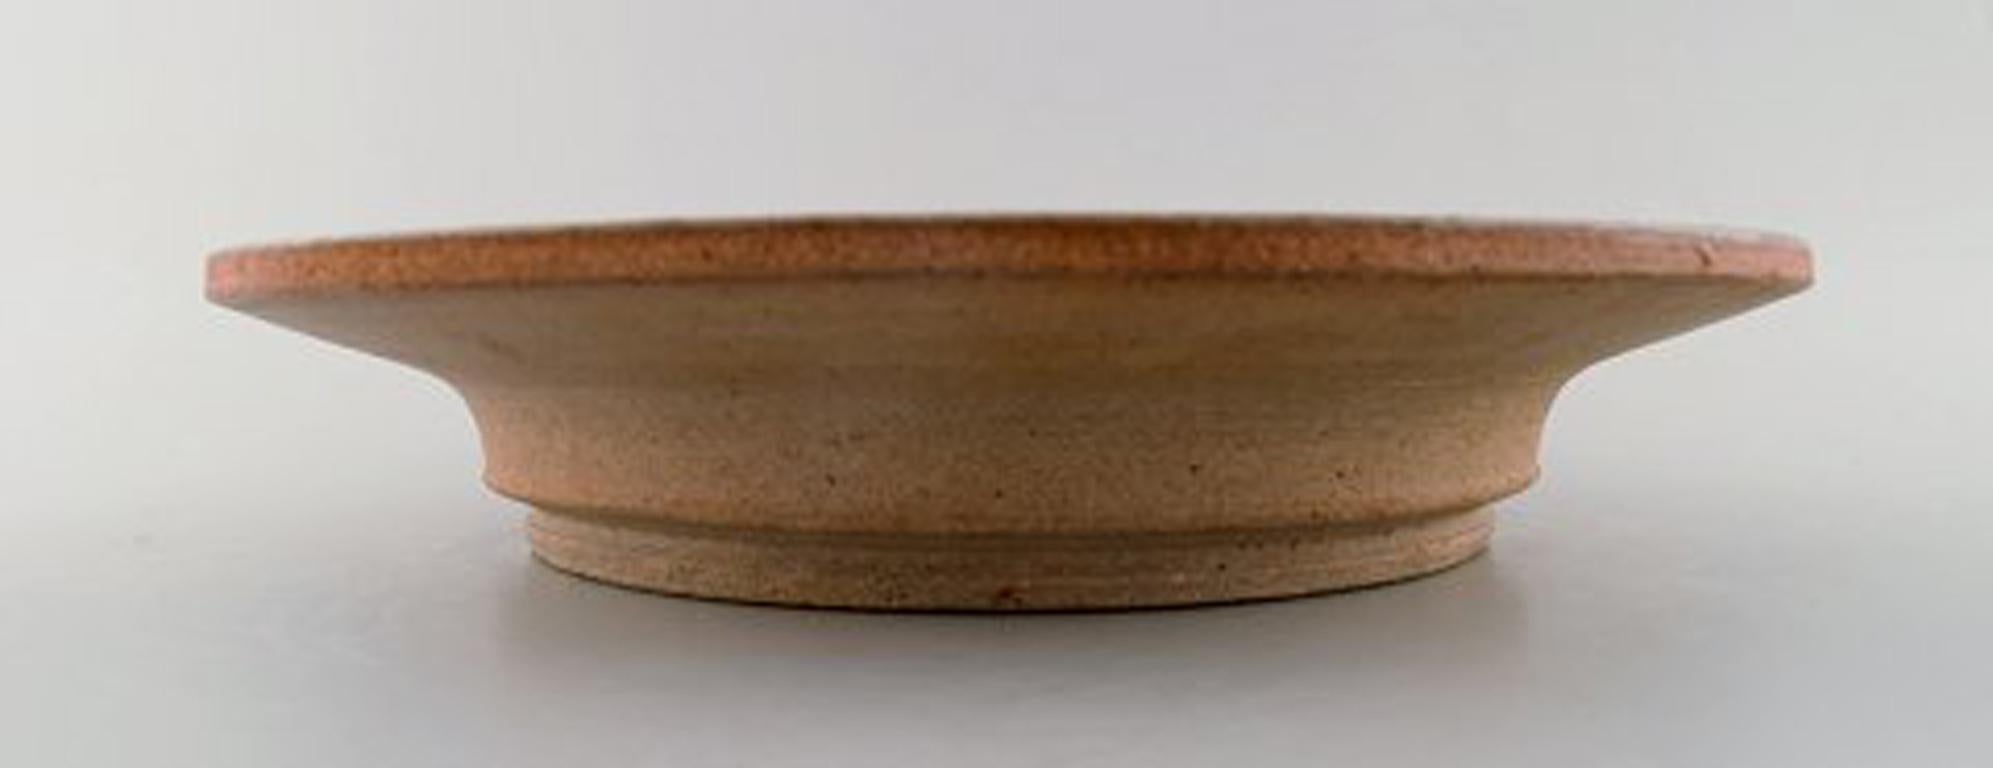 Scandinavian Modern Kähler, Denmark, Glazed Stoneware Dish 1960s, Designed by Nils Kähler